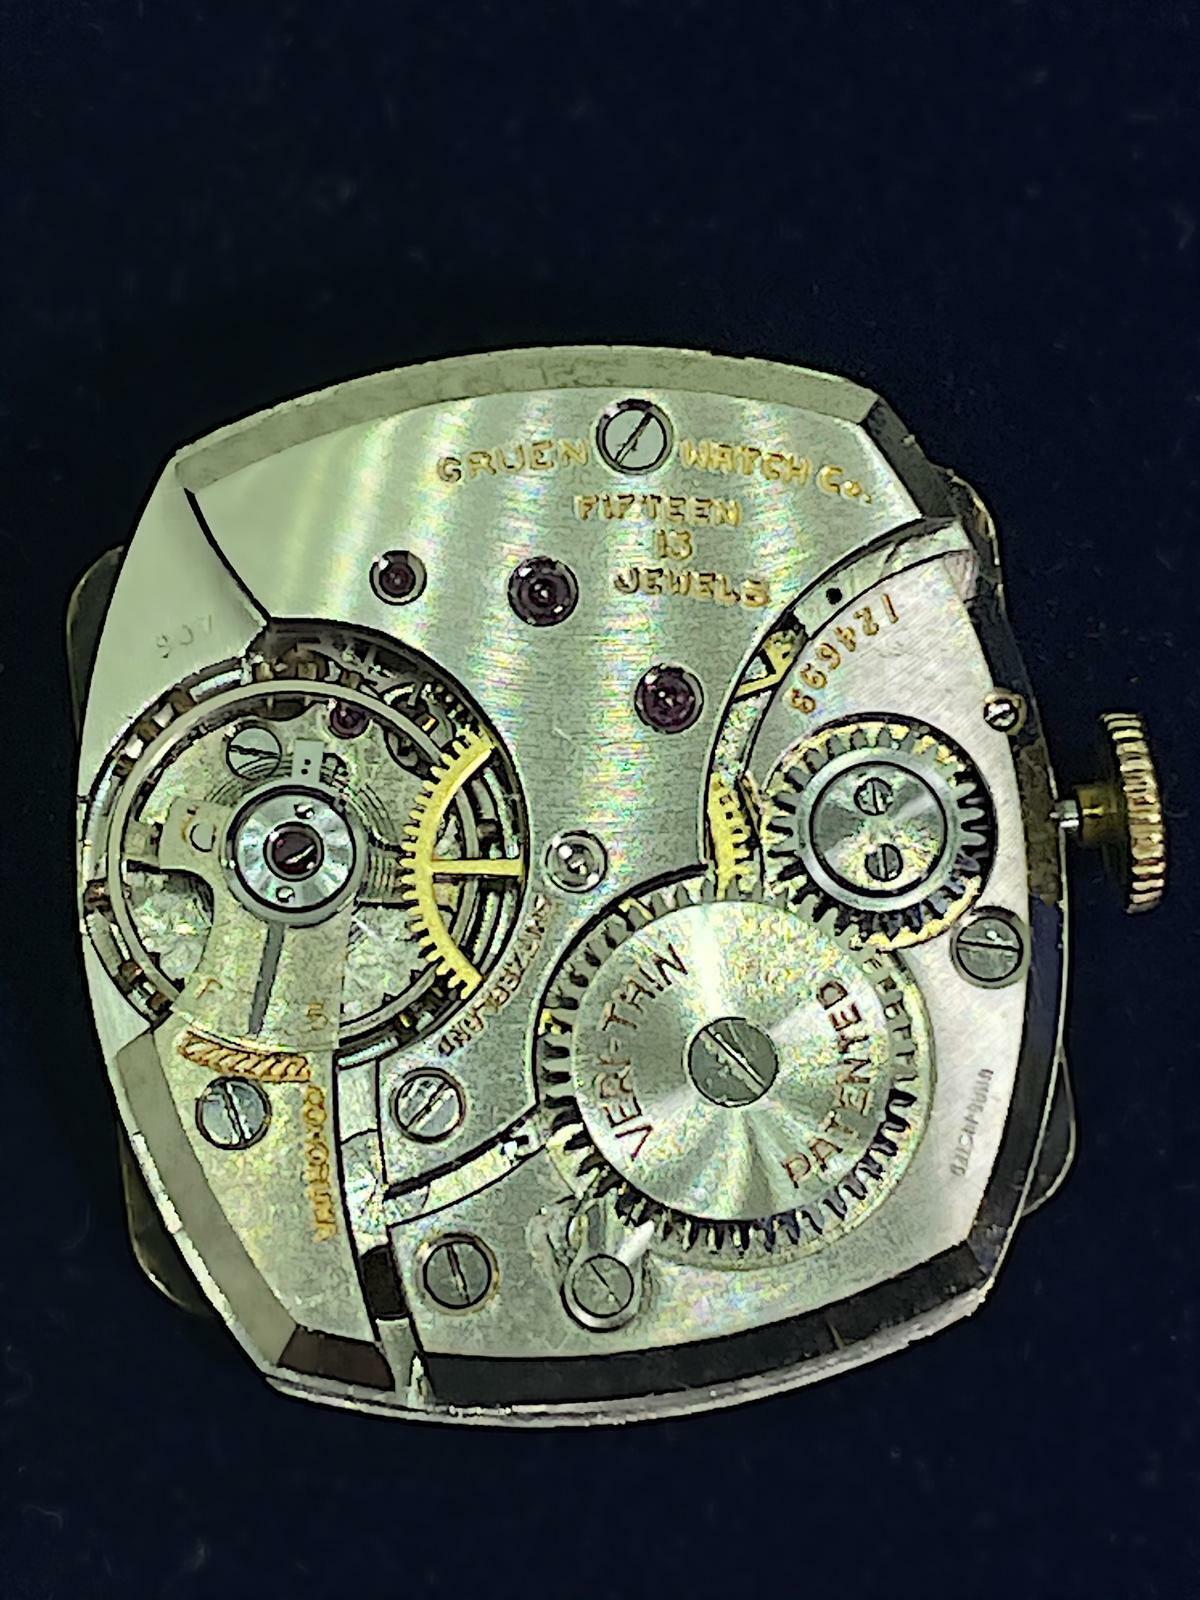 women's gruen veri thin watch